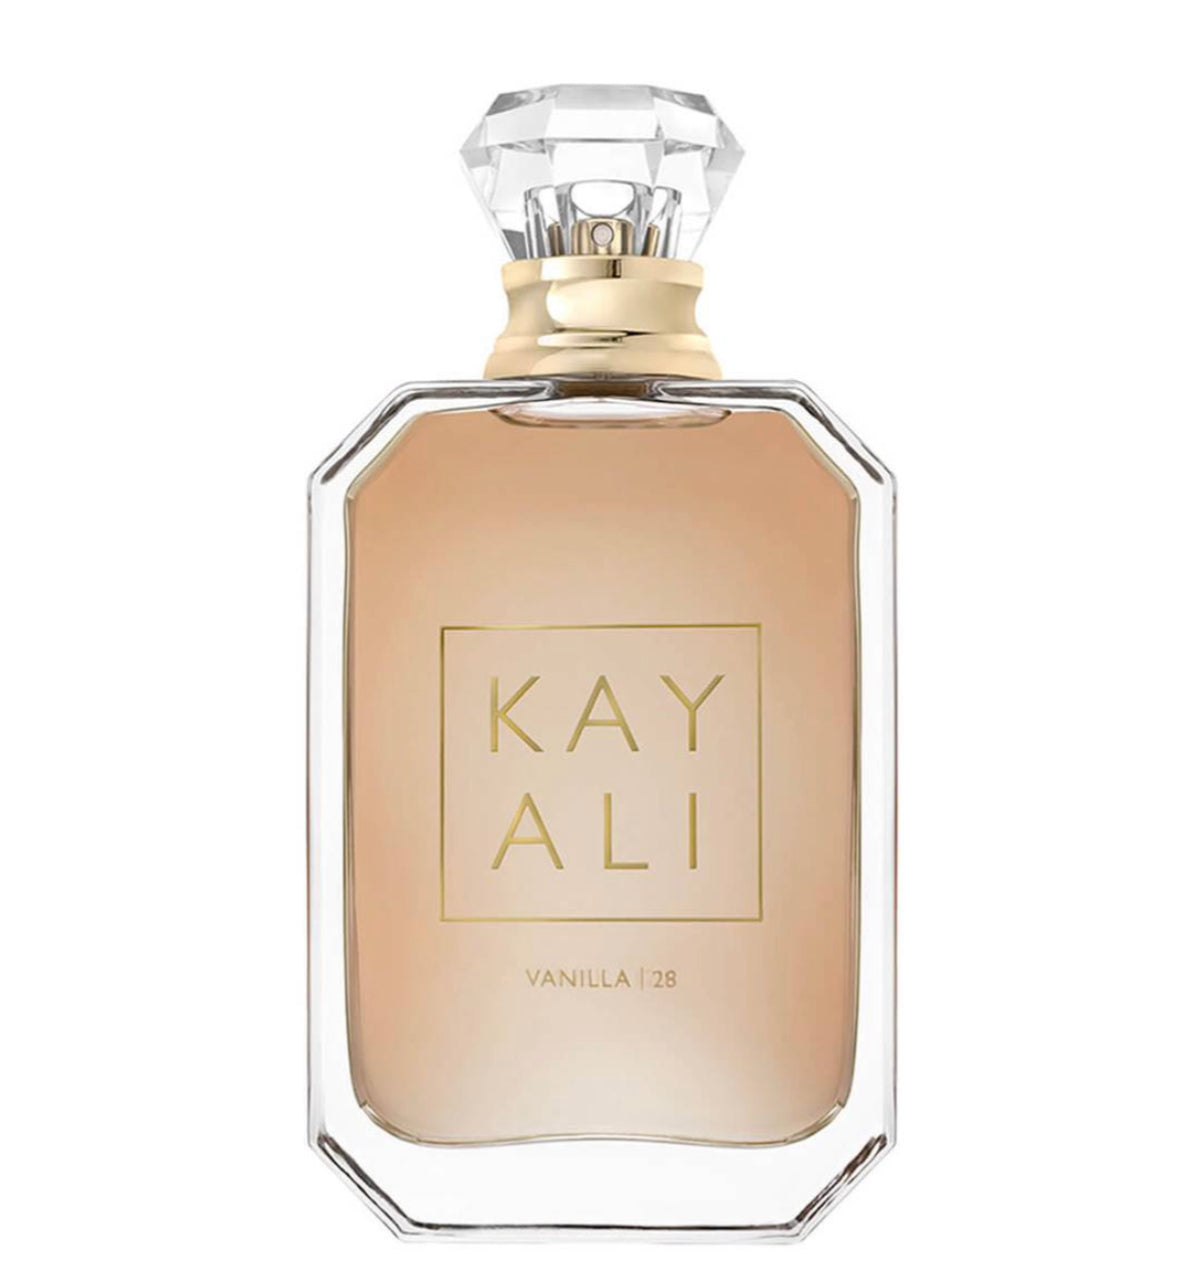 KAYALI Vanilla 28 Eau De Parfum Samples